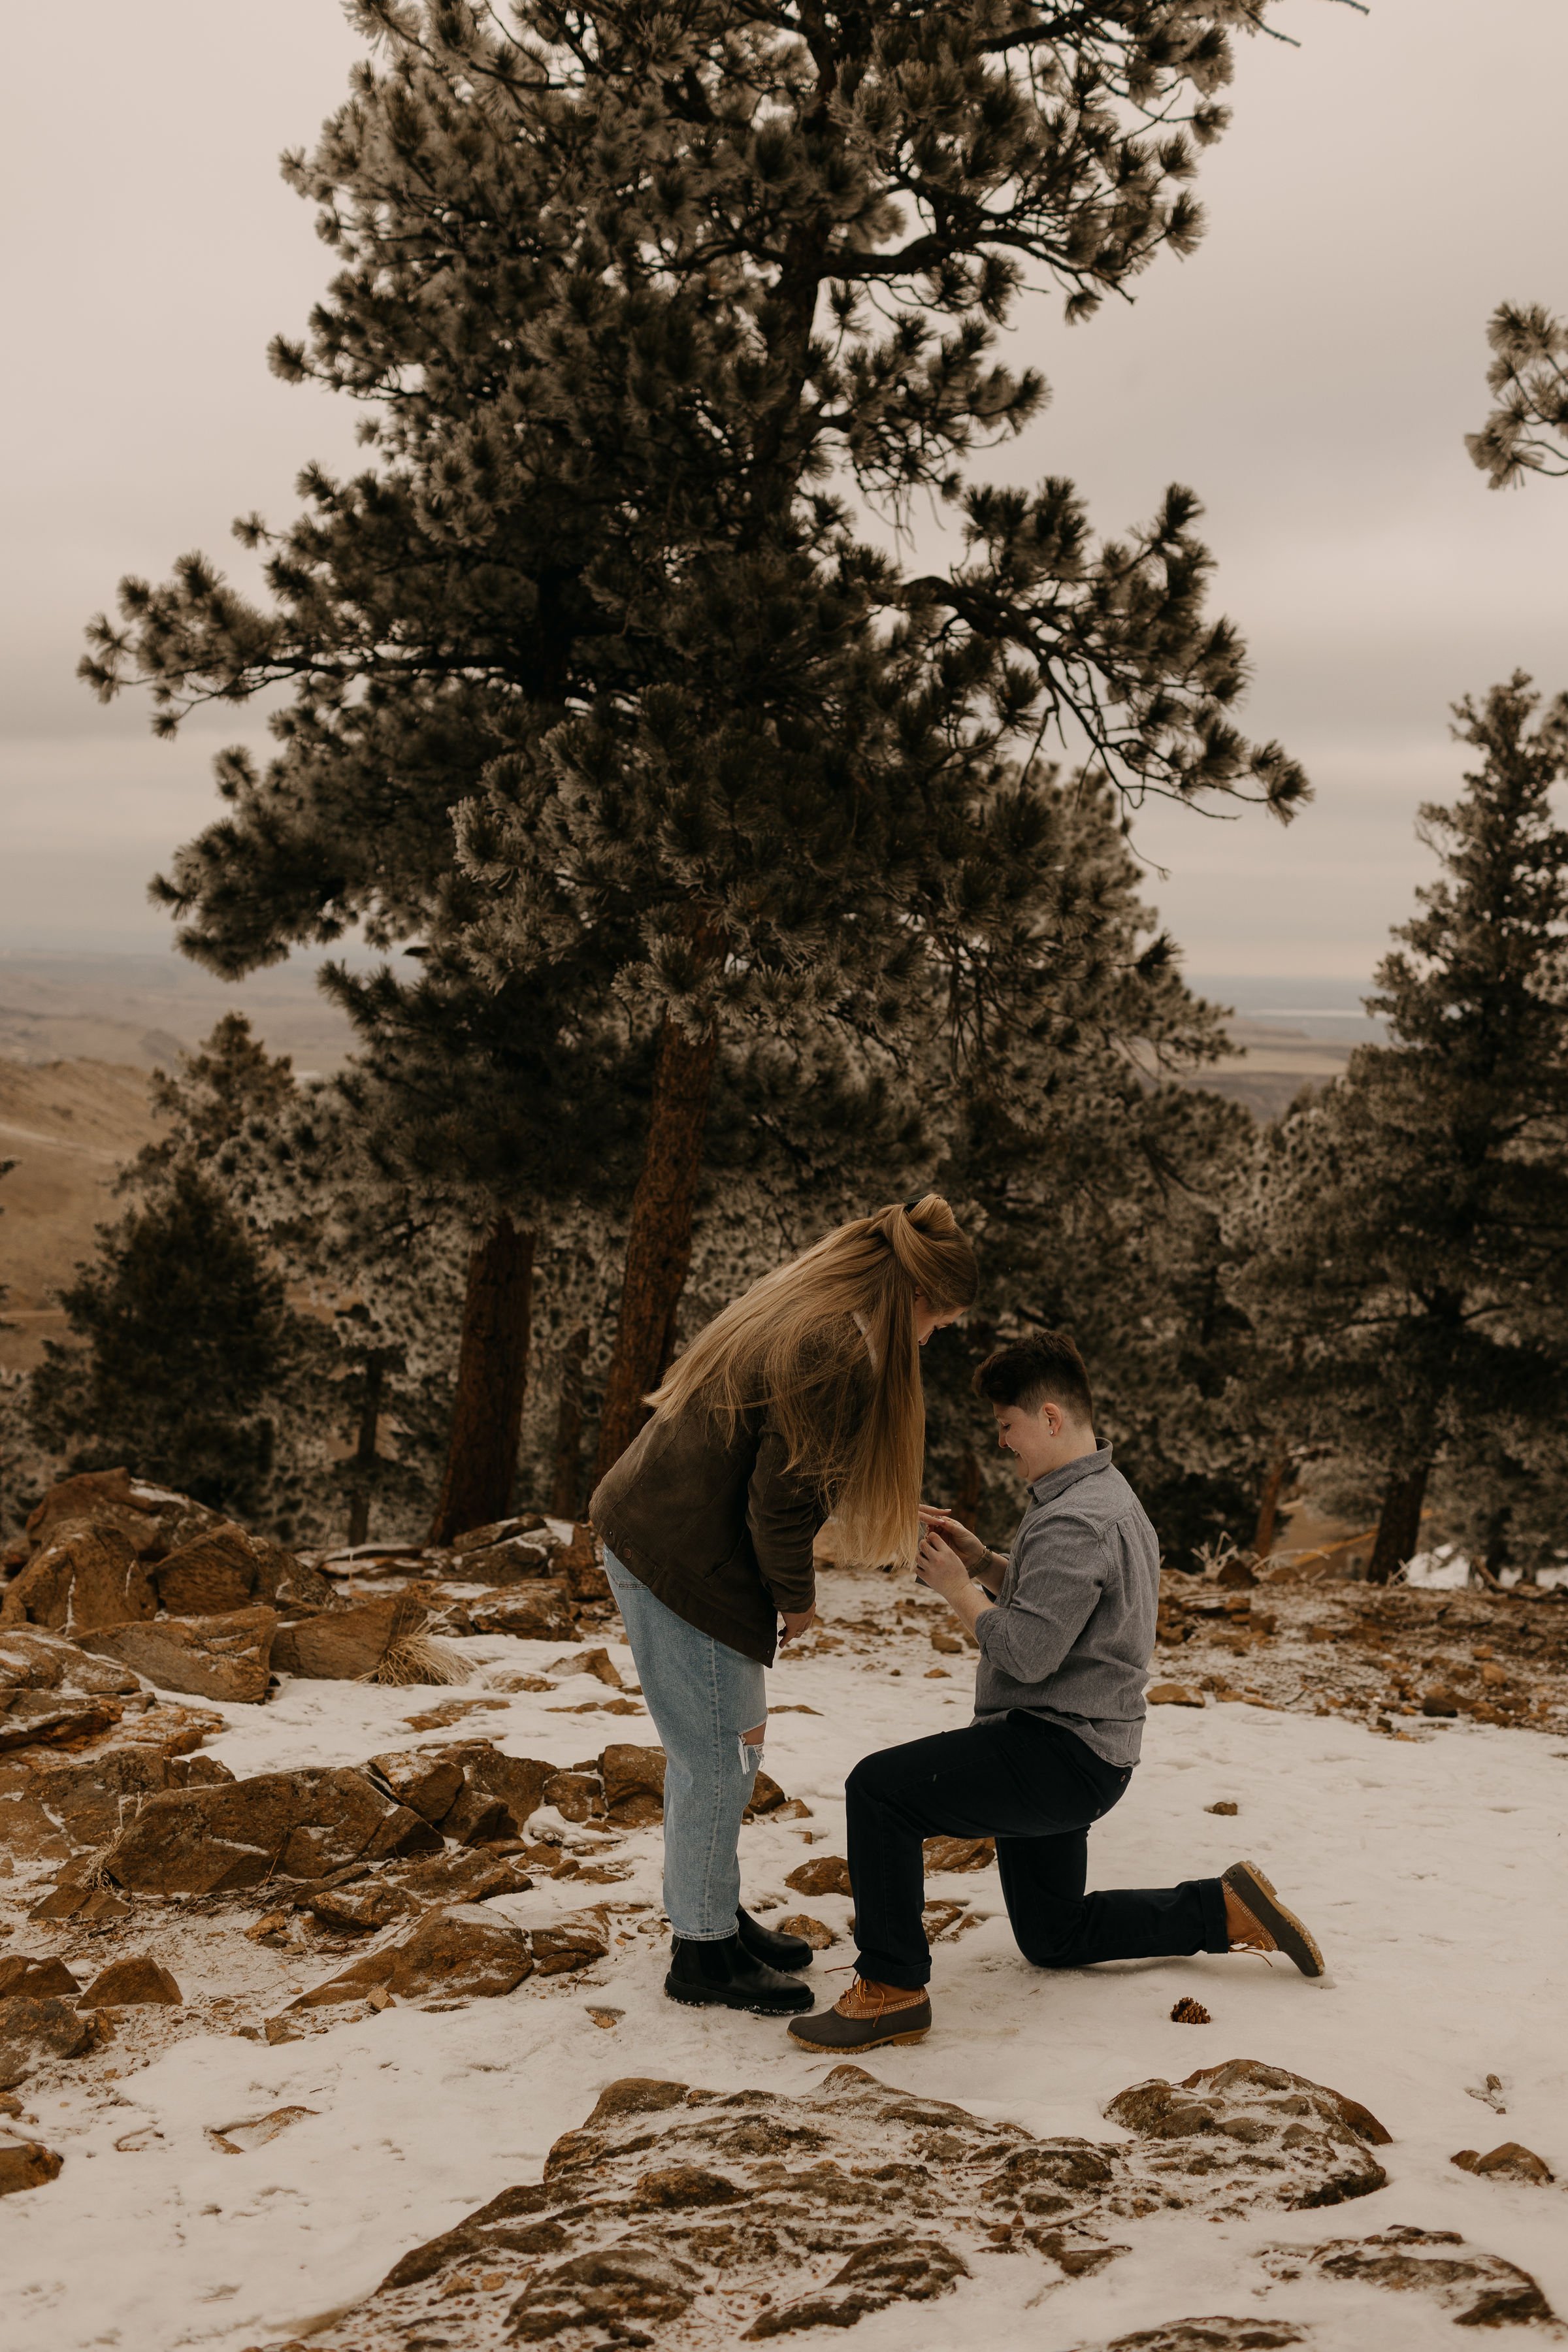 Lookout Mountain Park Surprise Proposal Golden Colorado Photos